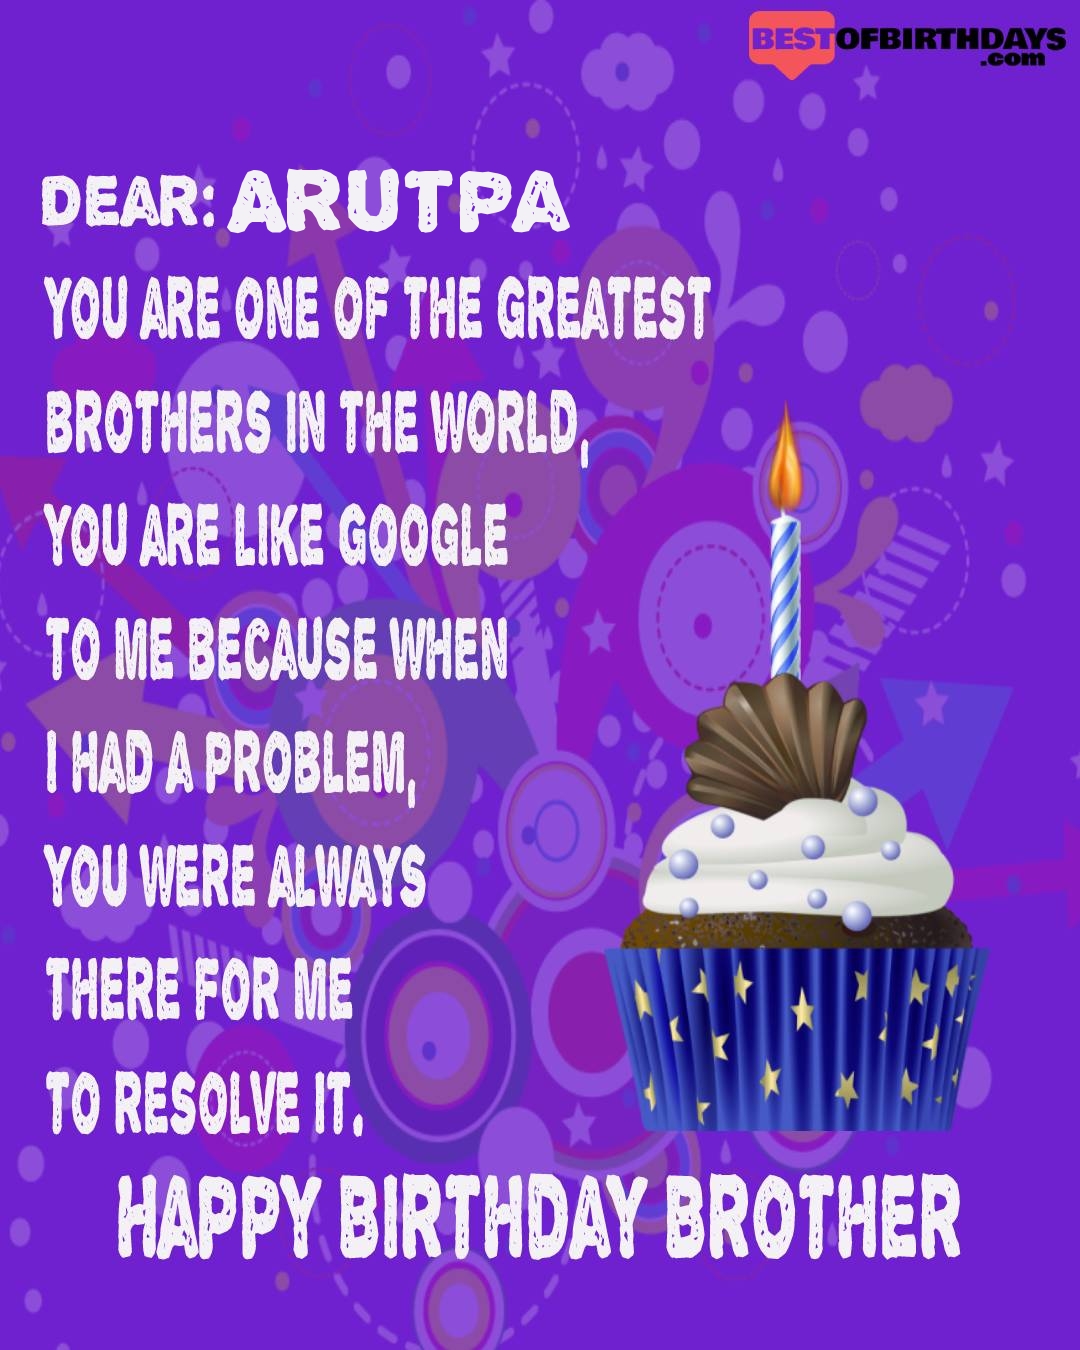 Happy birthday arutpa bhai brother bro